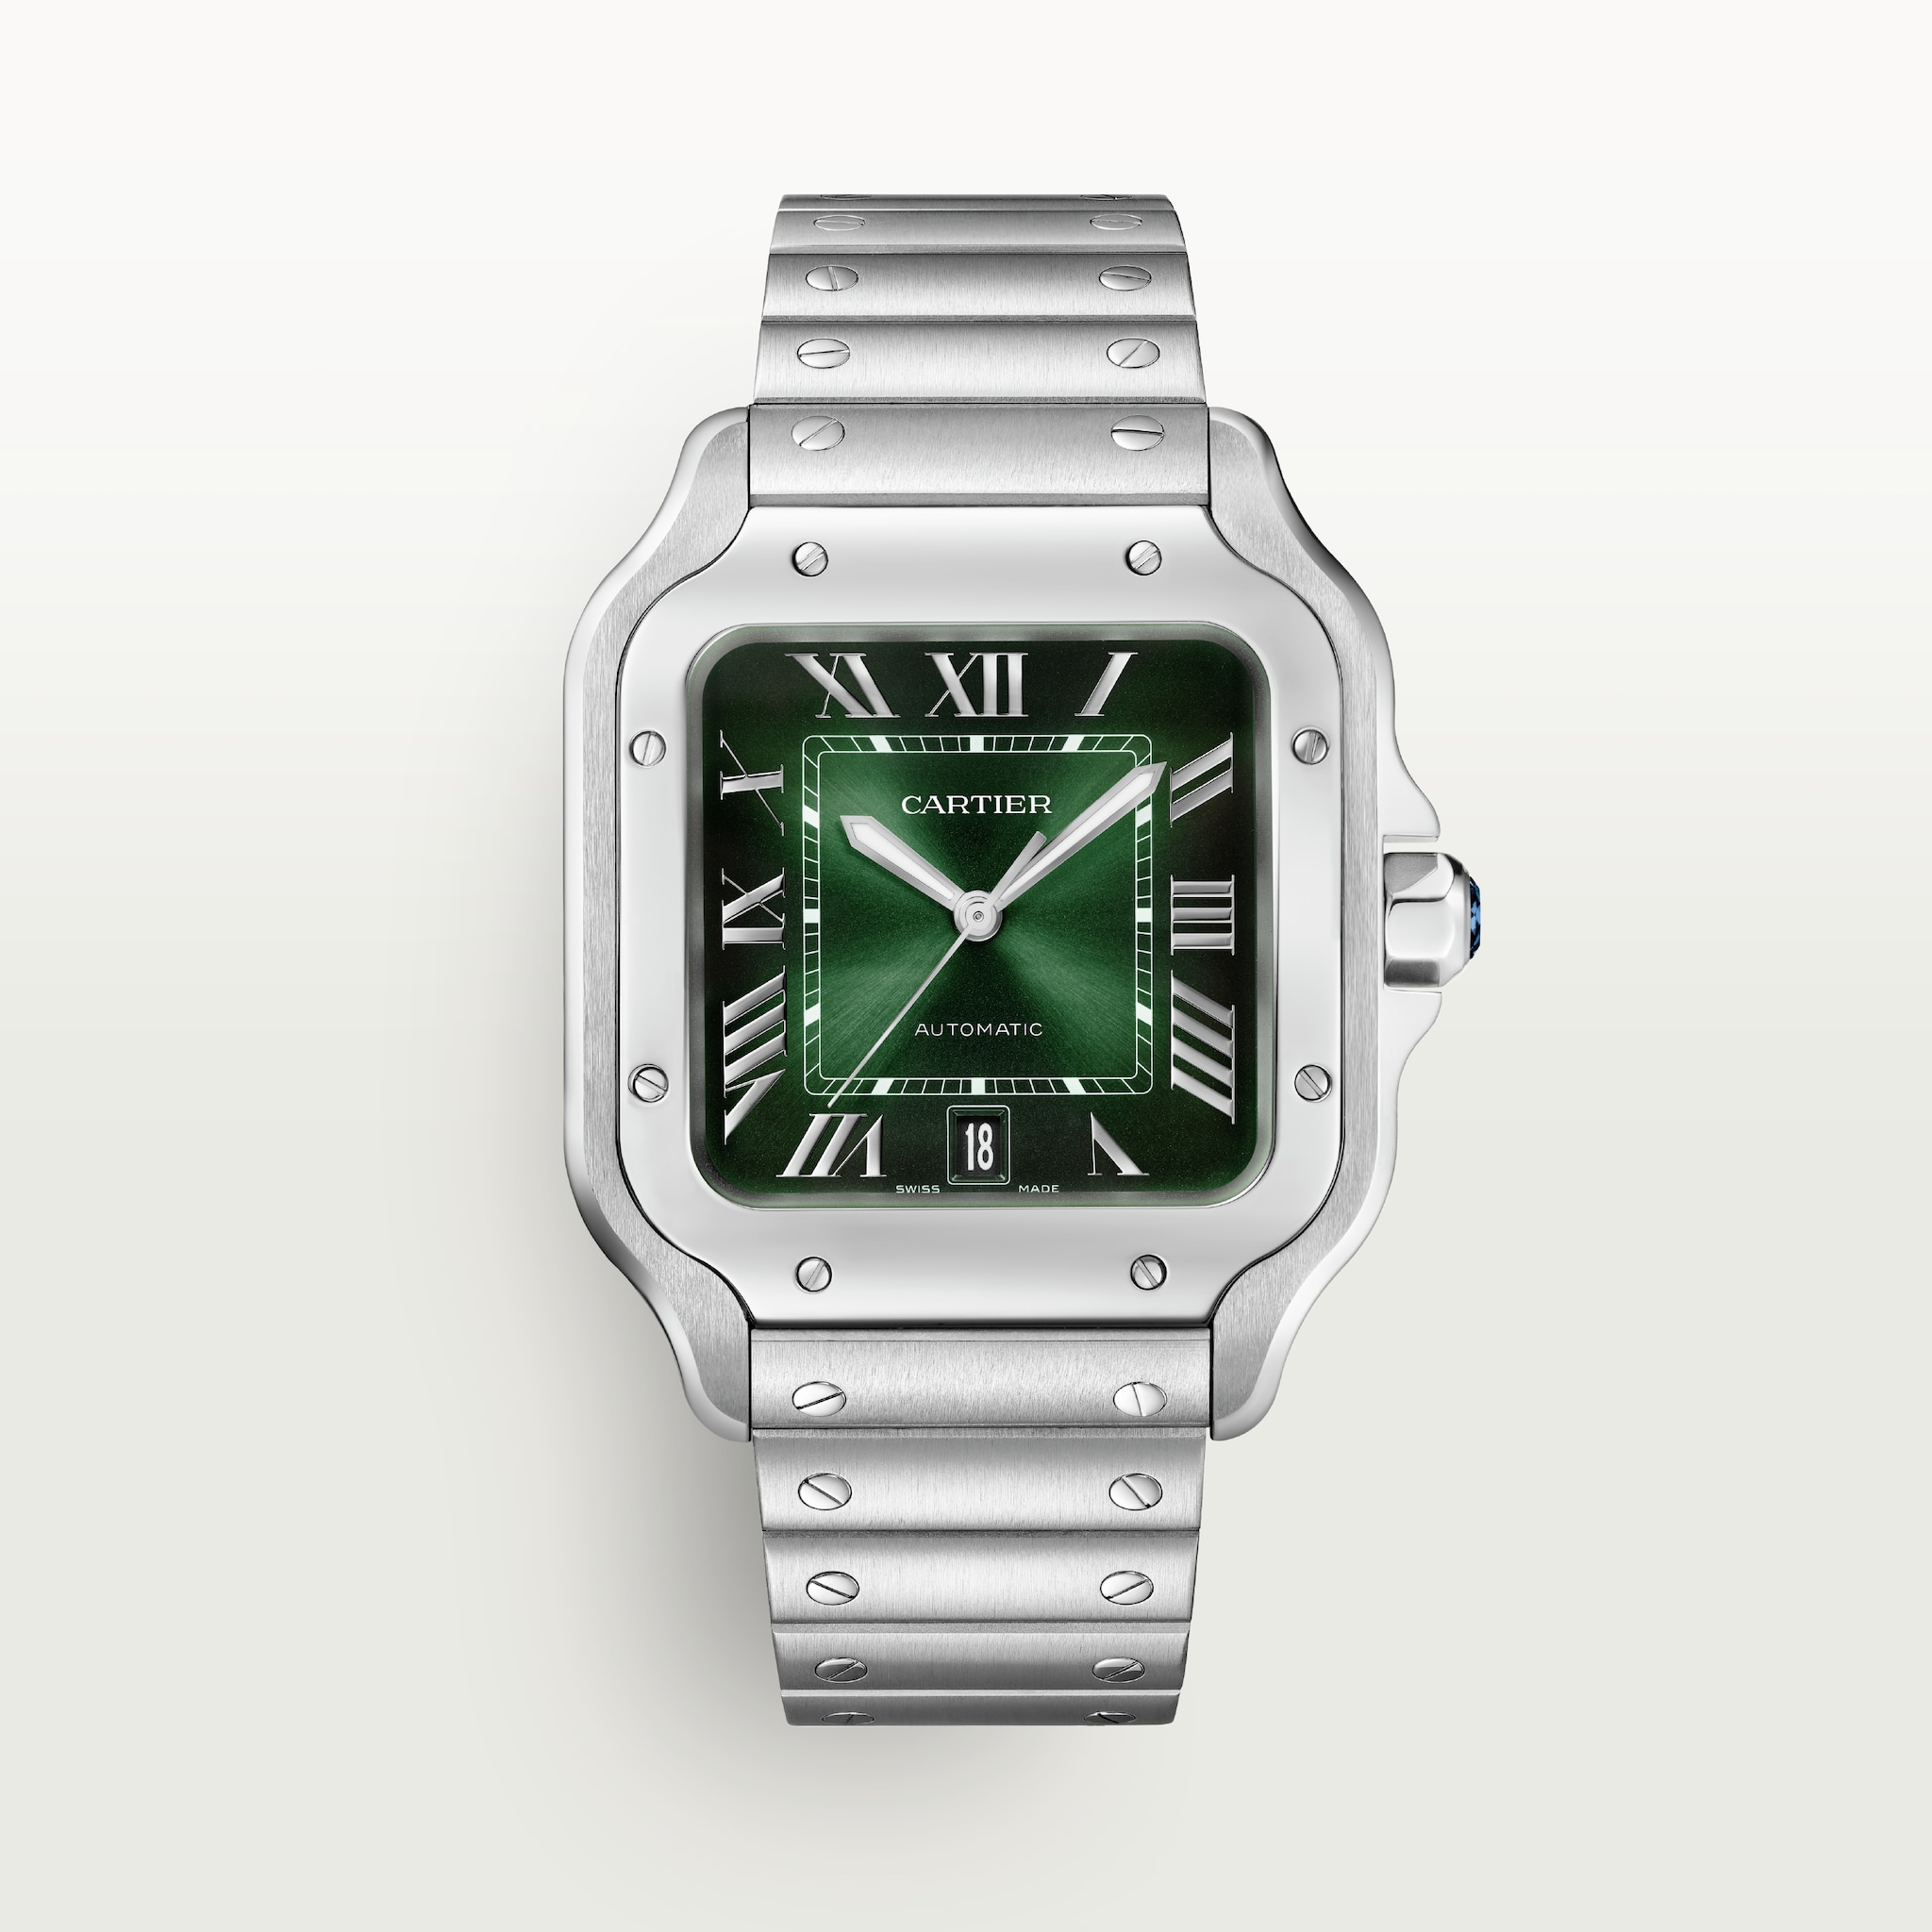 Santos de Cartier watchLarge model, automatic movement, steel, interchangeable metal and leather bracelets